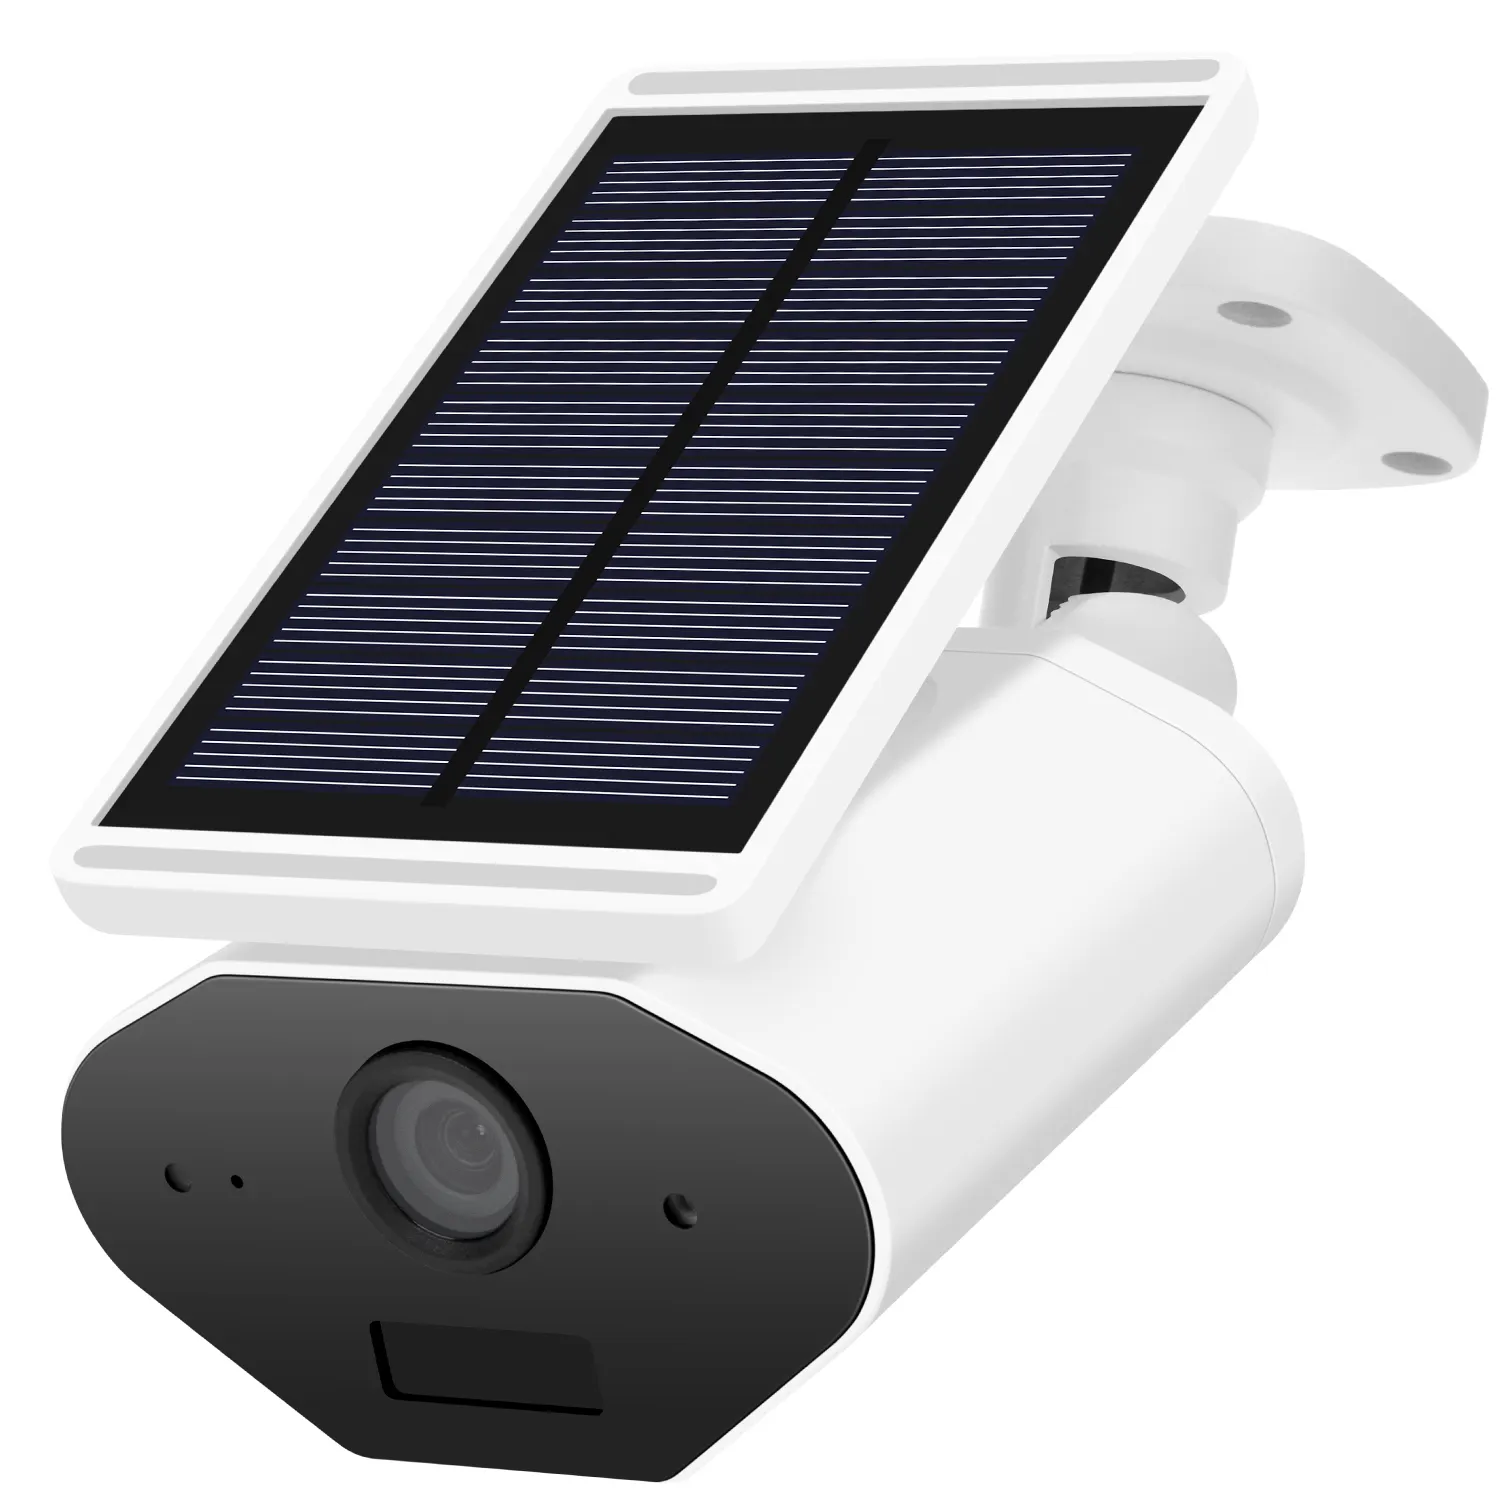 1080p HD surveillance solar powered panel wireless camera cctv solar wifi security alarm camera outdoor motion detection system